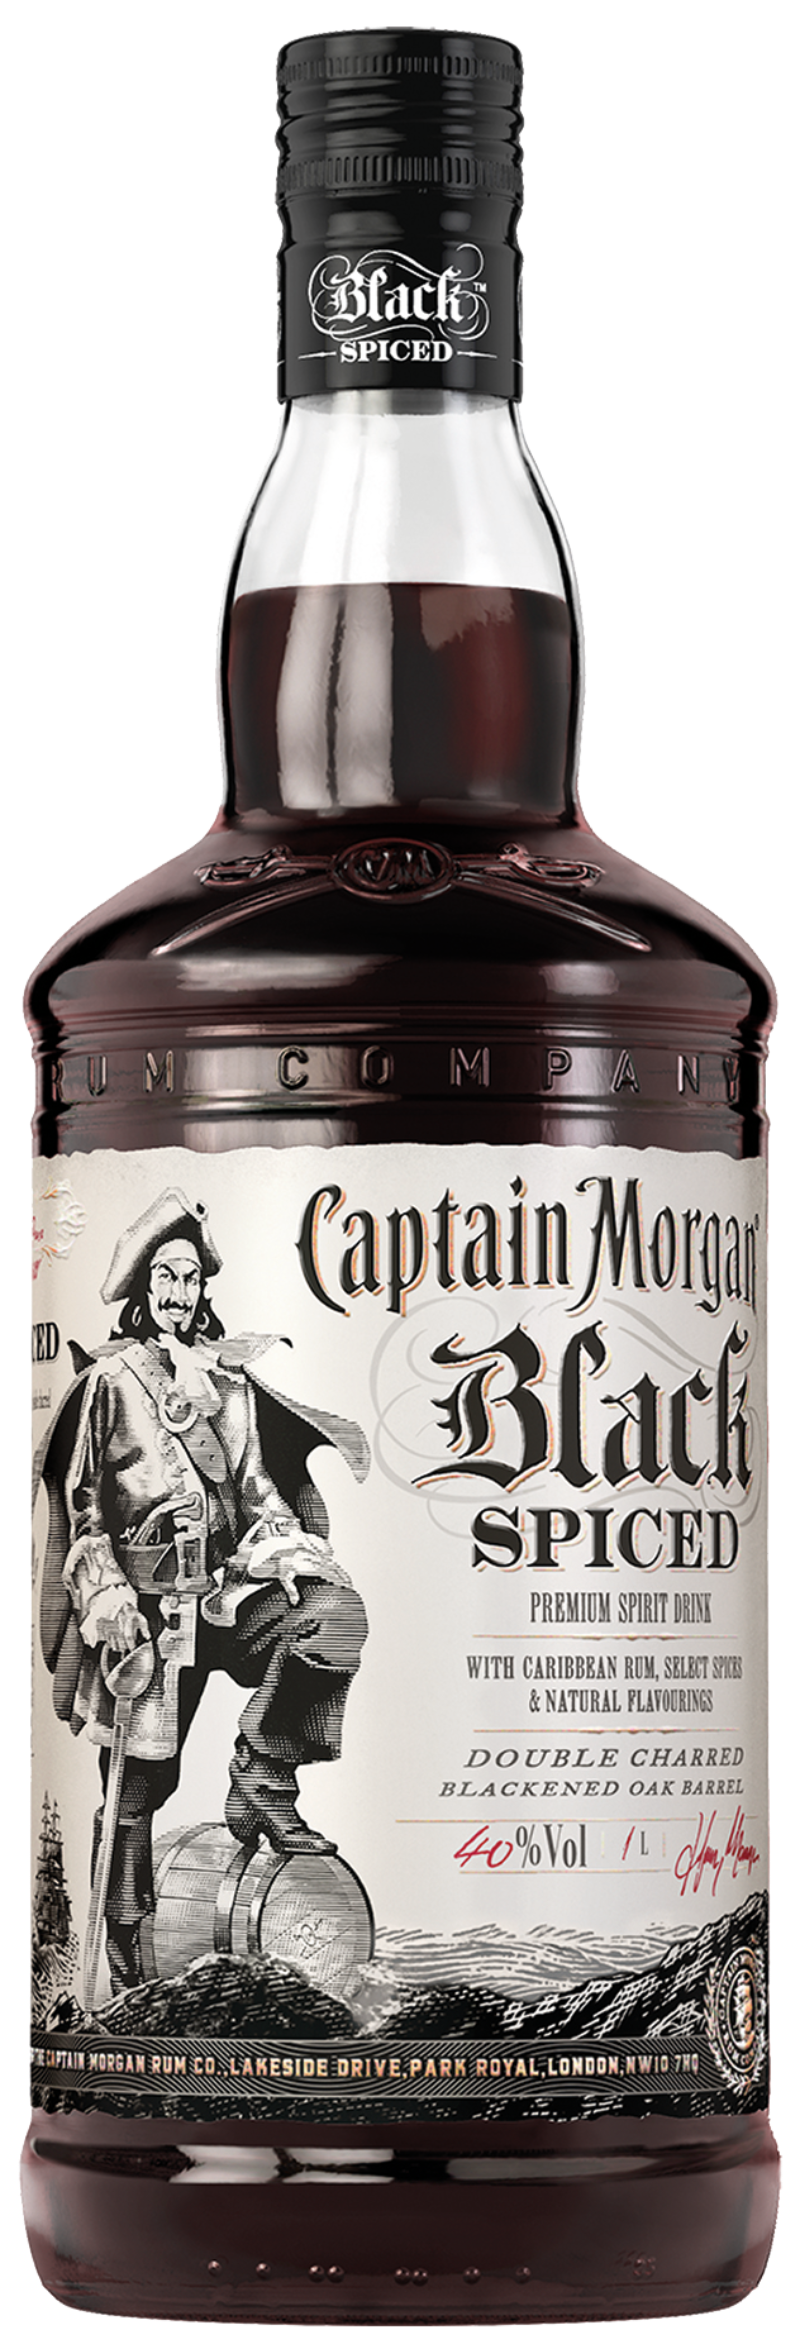 cl 40% Morgan Spiced - Black Captain vol 100